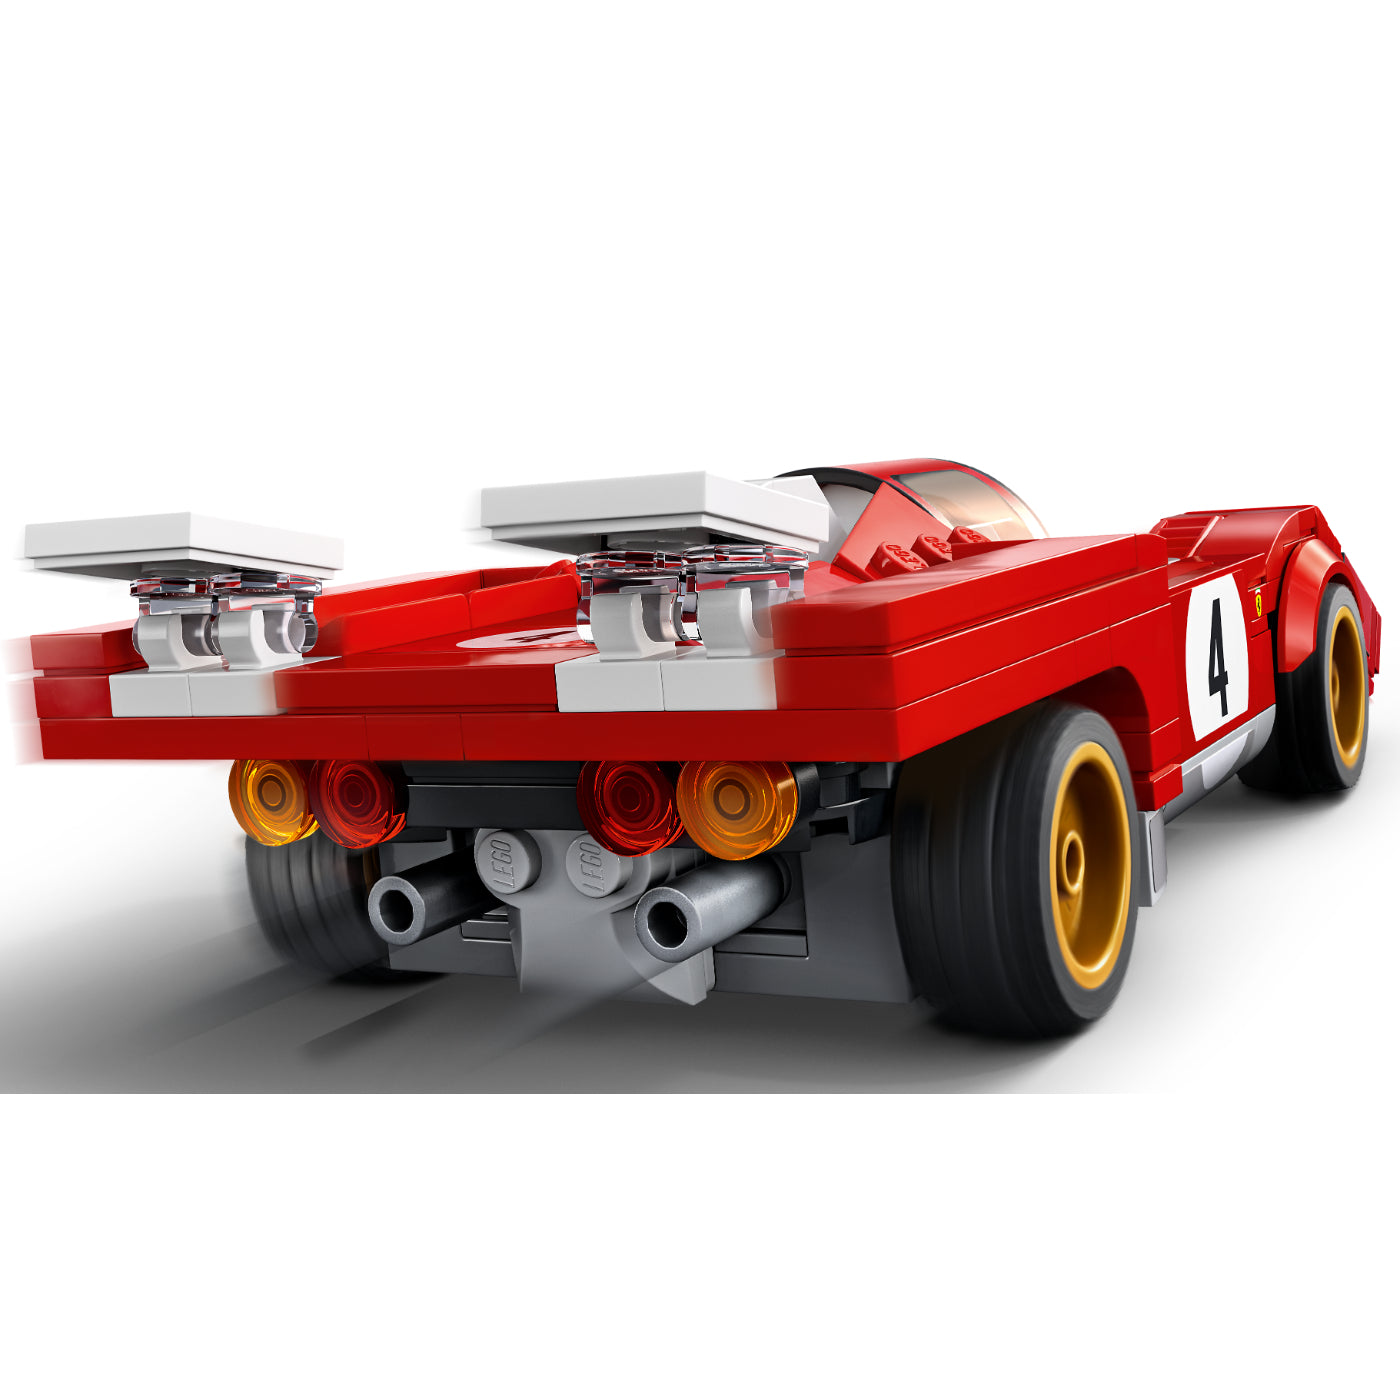 LEGO® Speed Champions : 1970 Ferrari 512 M (76906)